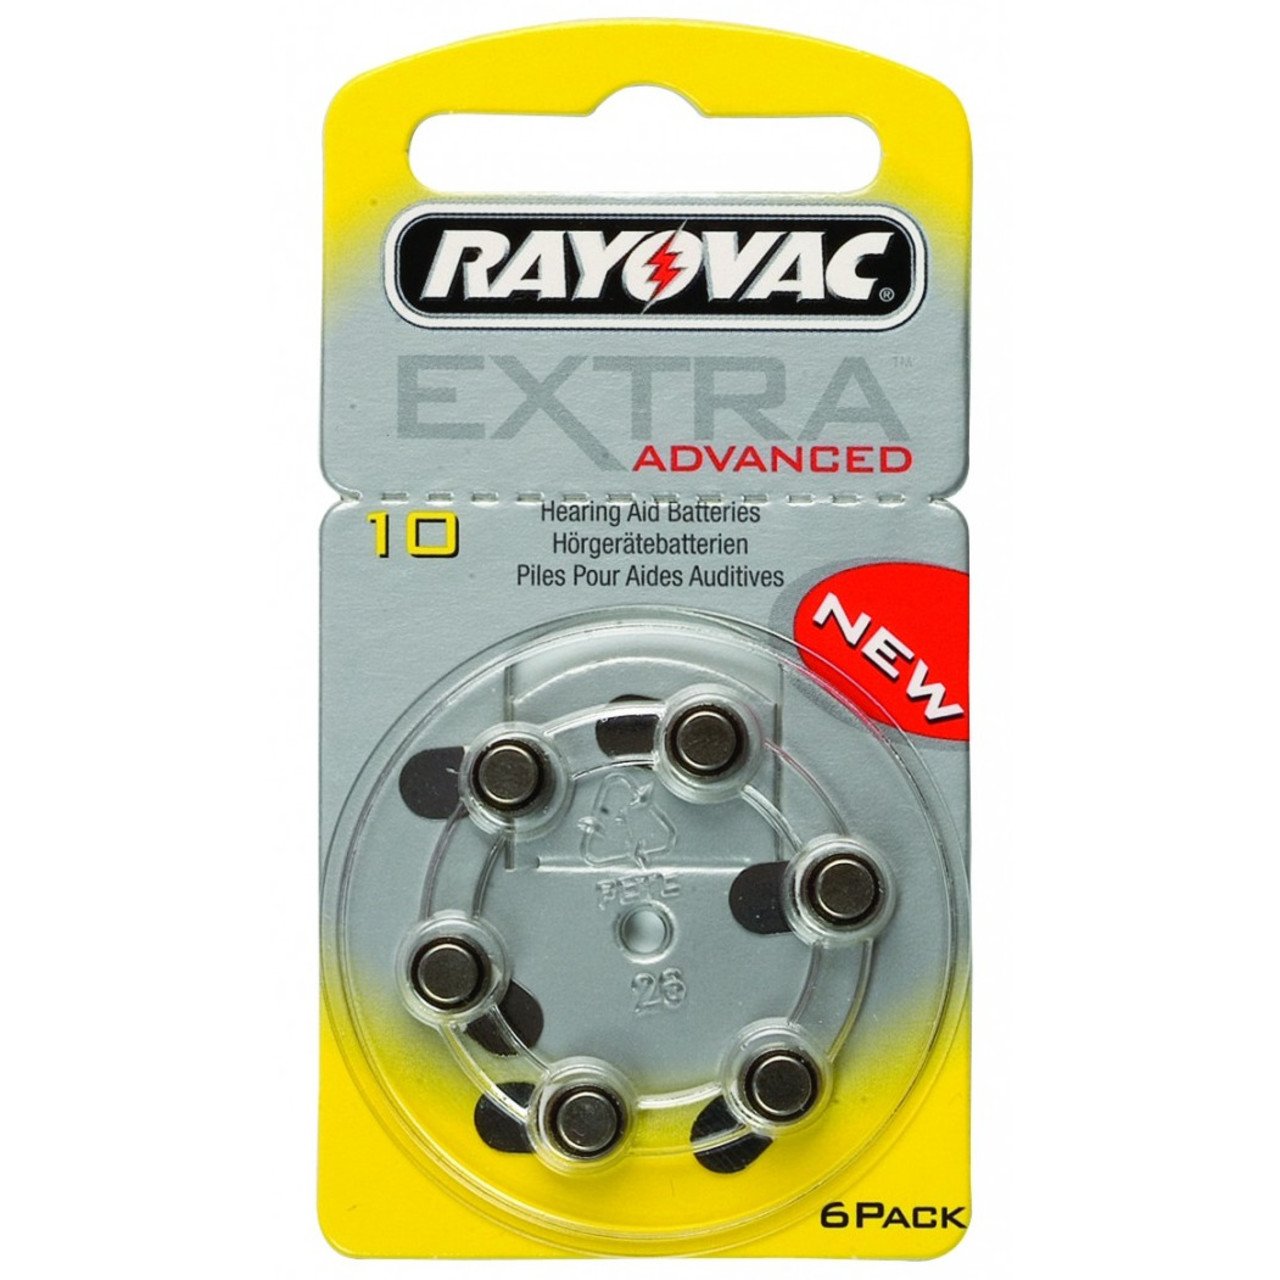 Rayovac Hearing Aid Batteries x 60 Size 10